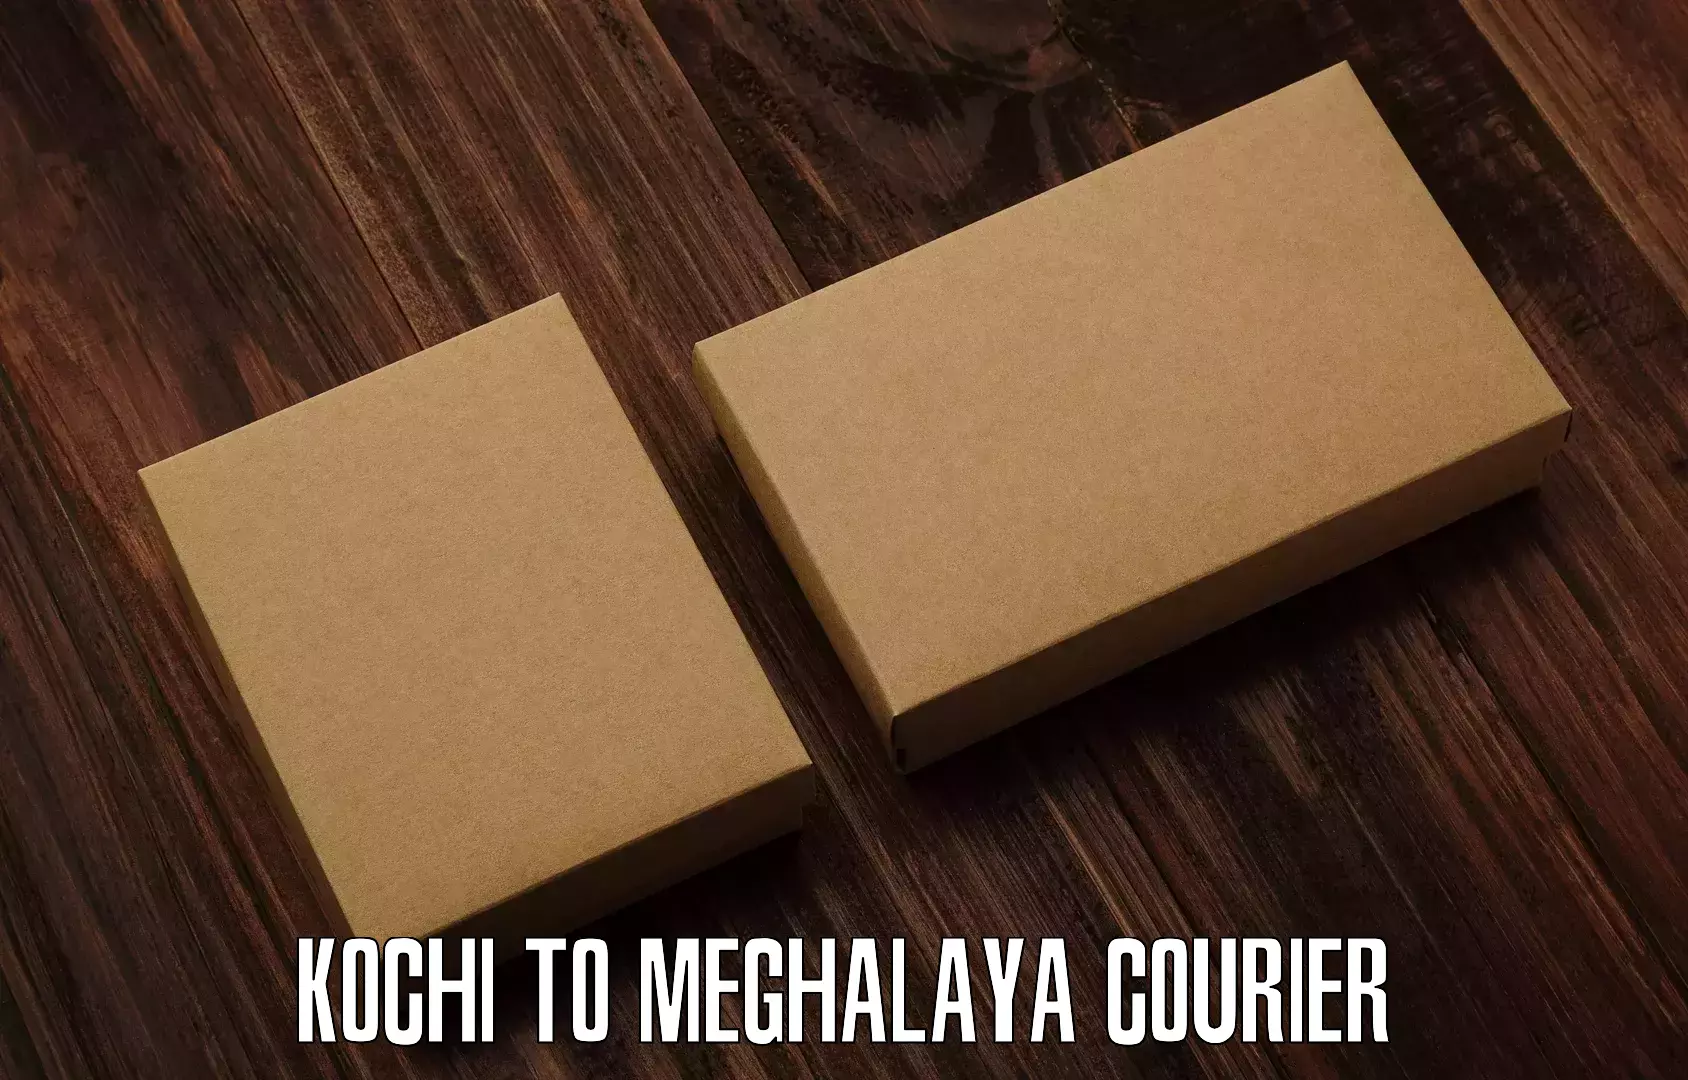 24-hour courier service Kochi to Cherrapunji